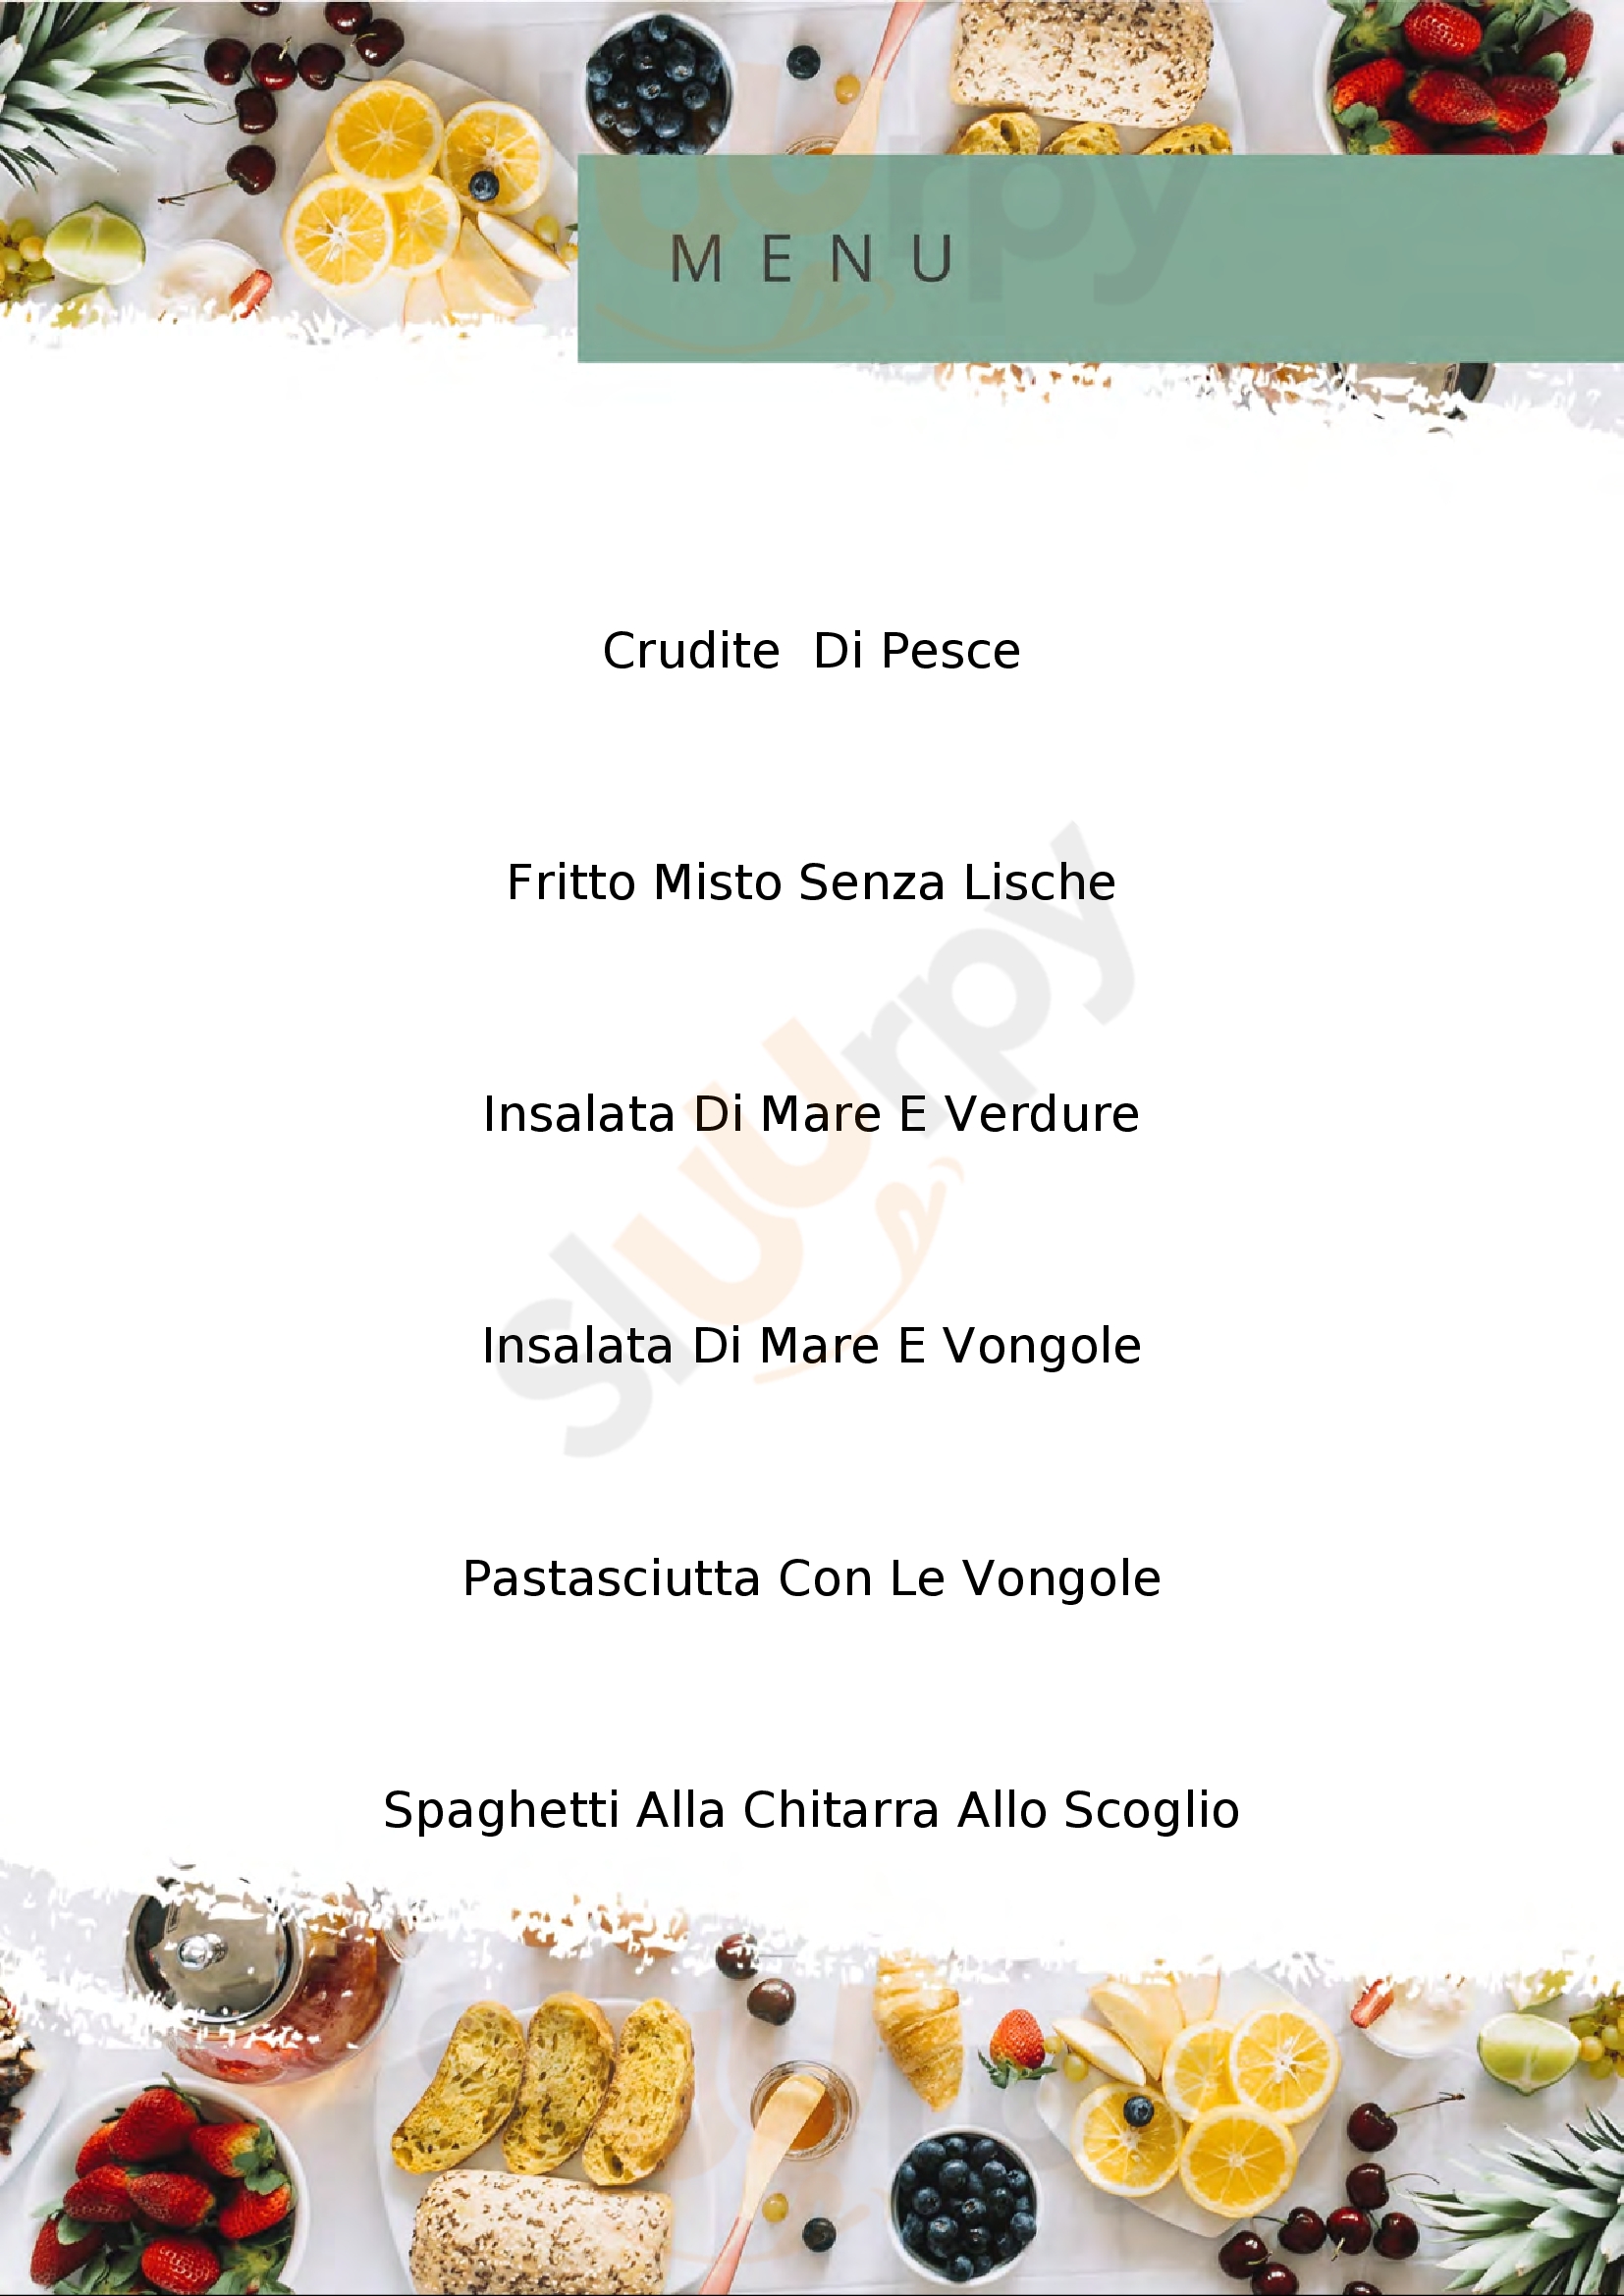 Ristorante  da Lucia Marina di Ravenna menù 1 pagina